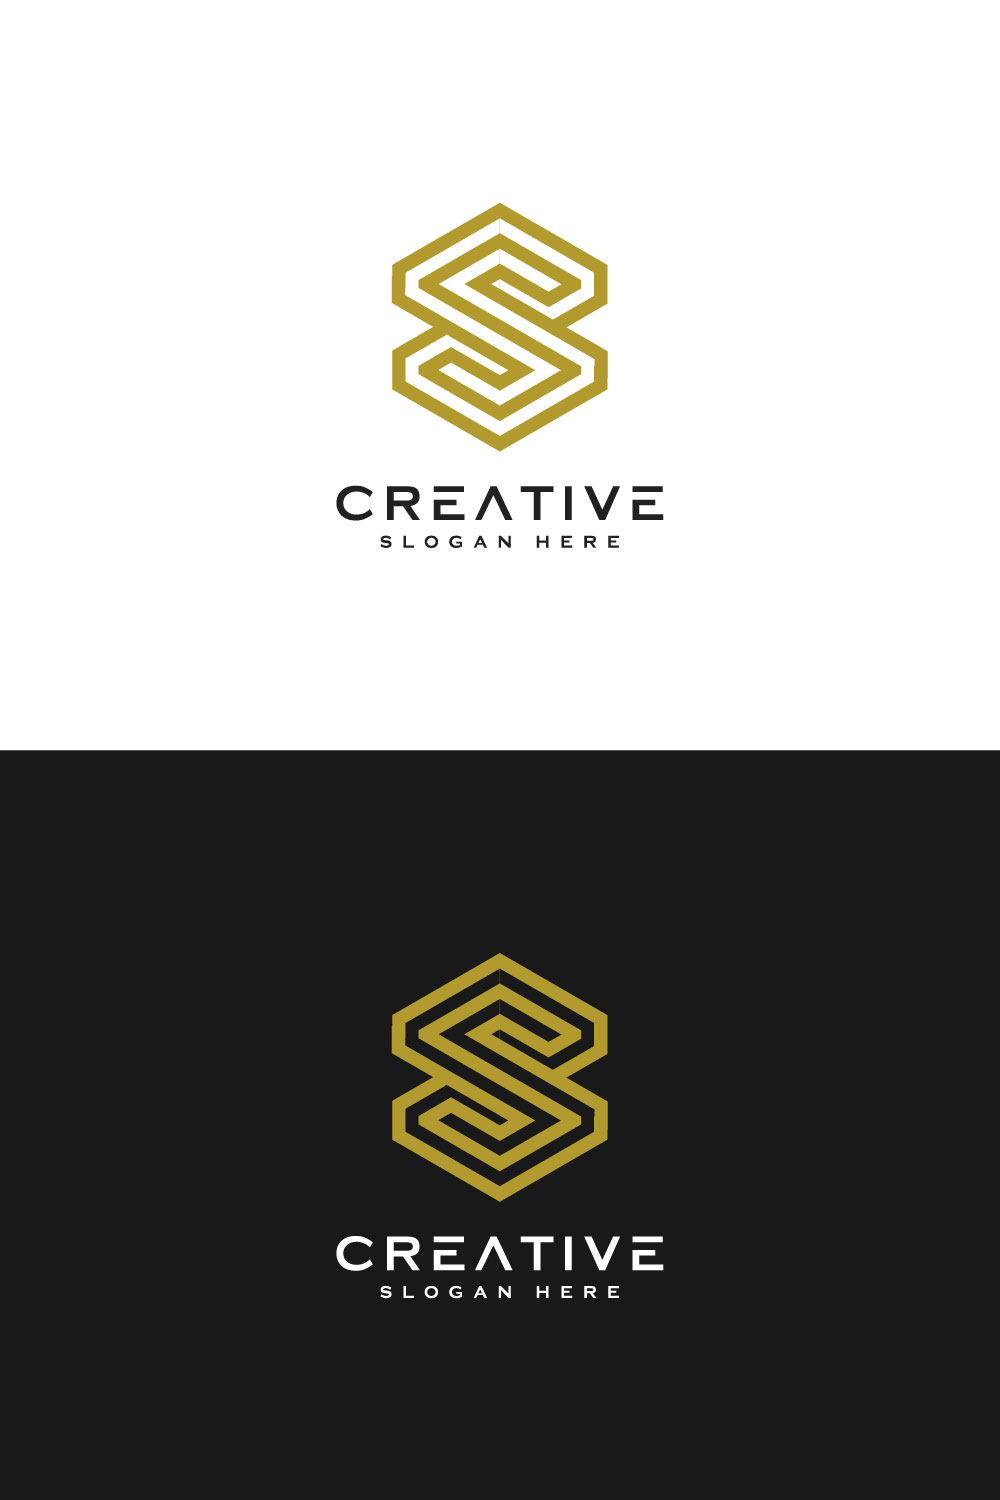 Line Style Letter S Logo Vector Design cover image.